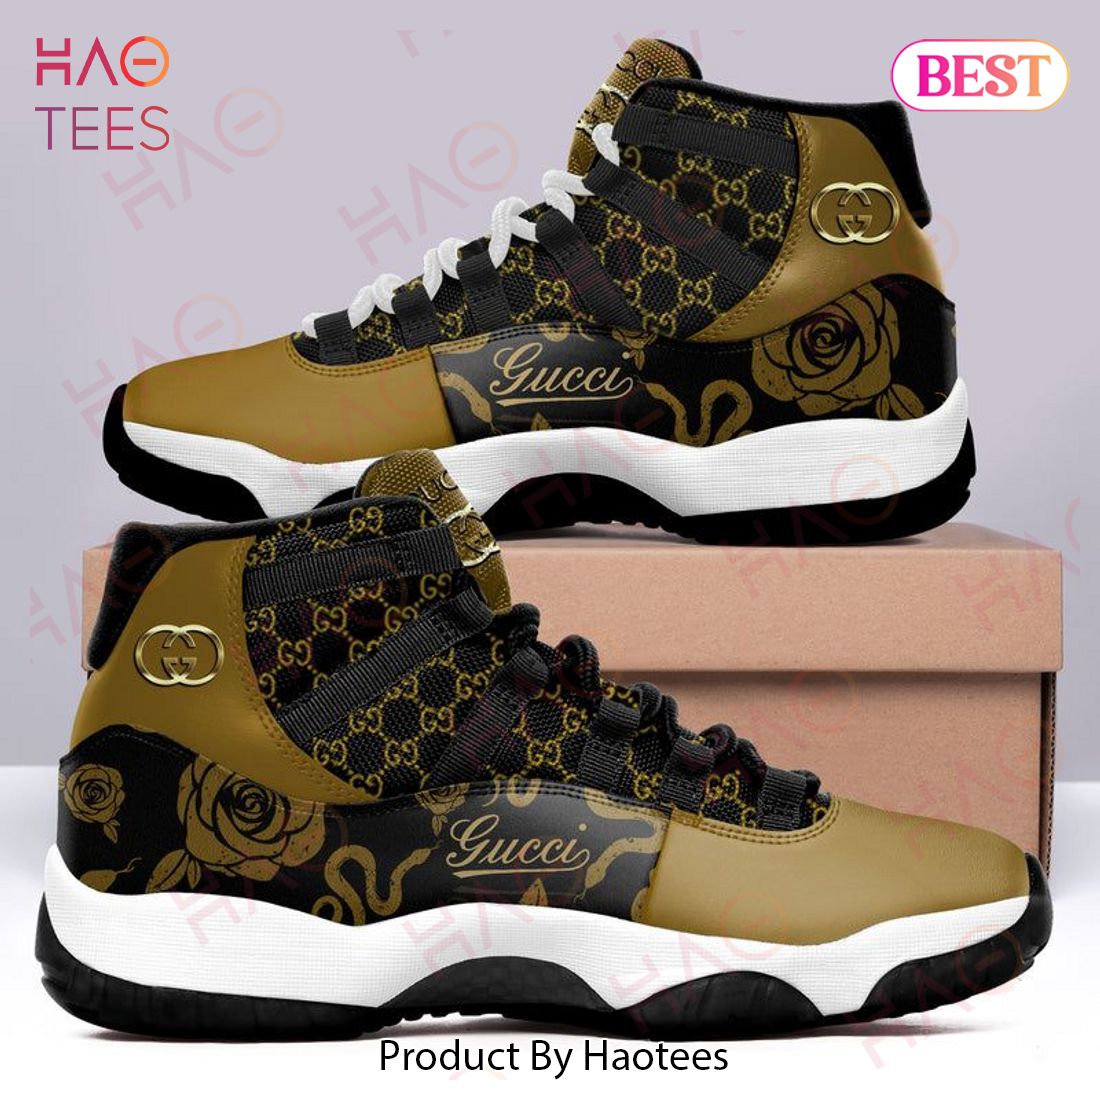 Gucci Air Jordan 11 Sneakers And Flowers Shoes Hot 2022 For Men Women